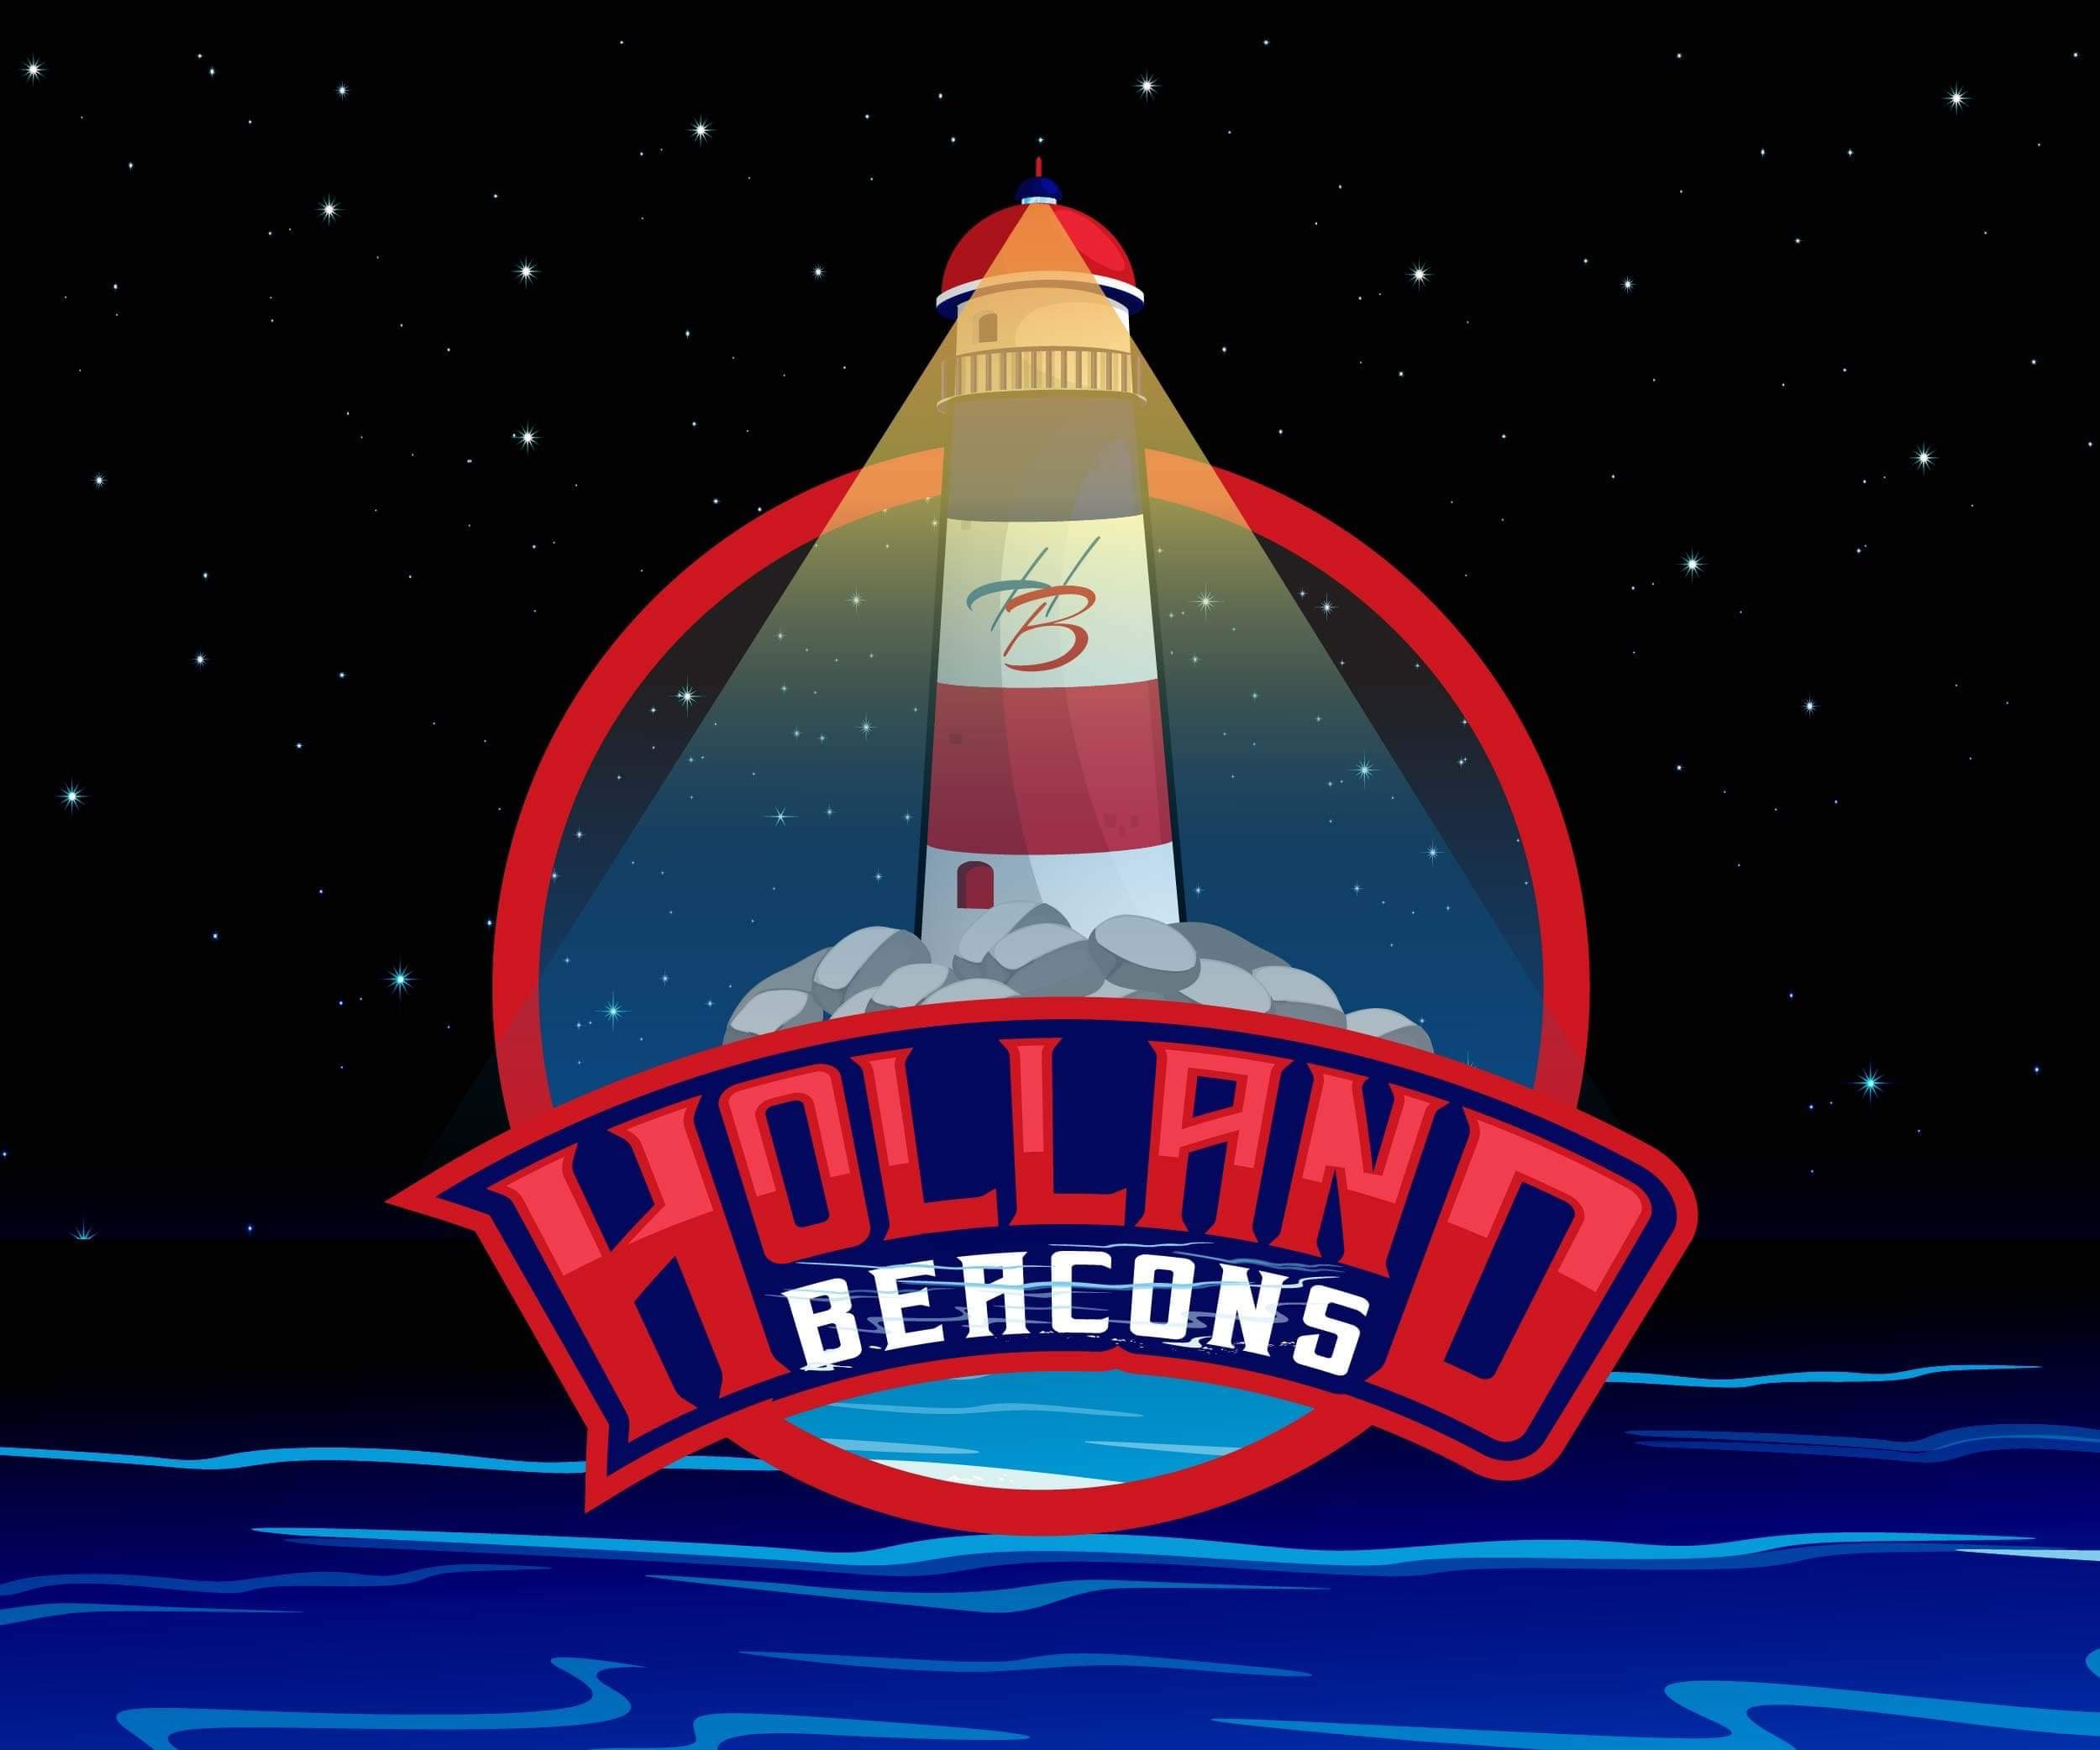 Holland Beacons